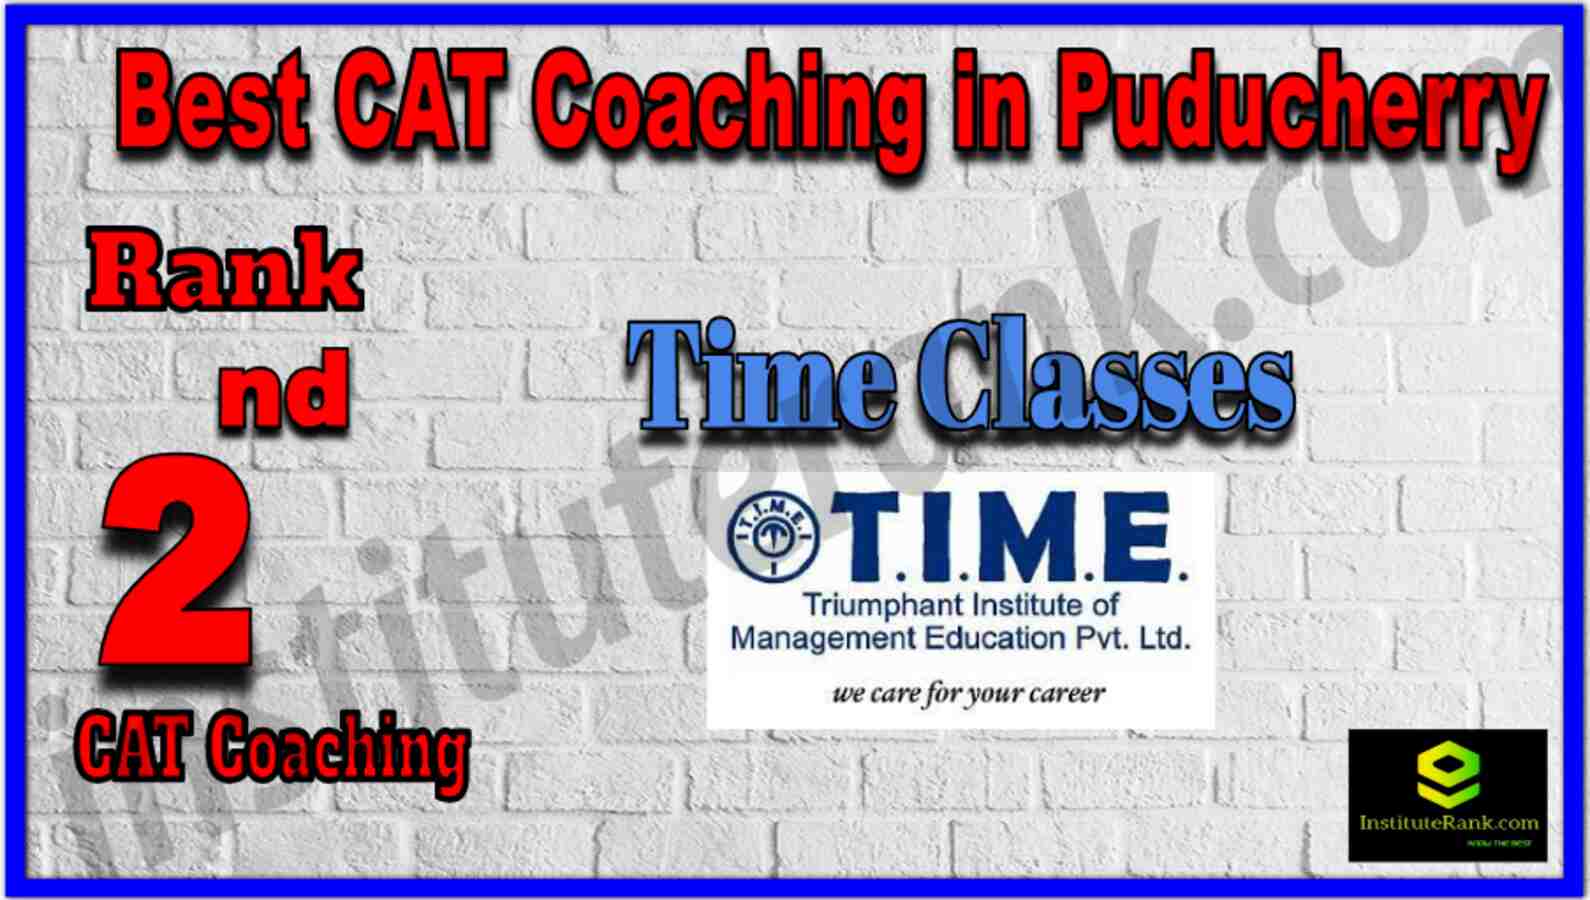 Rank 2 Best CAT Coaching in Puducherry